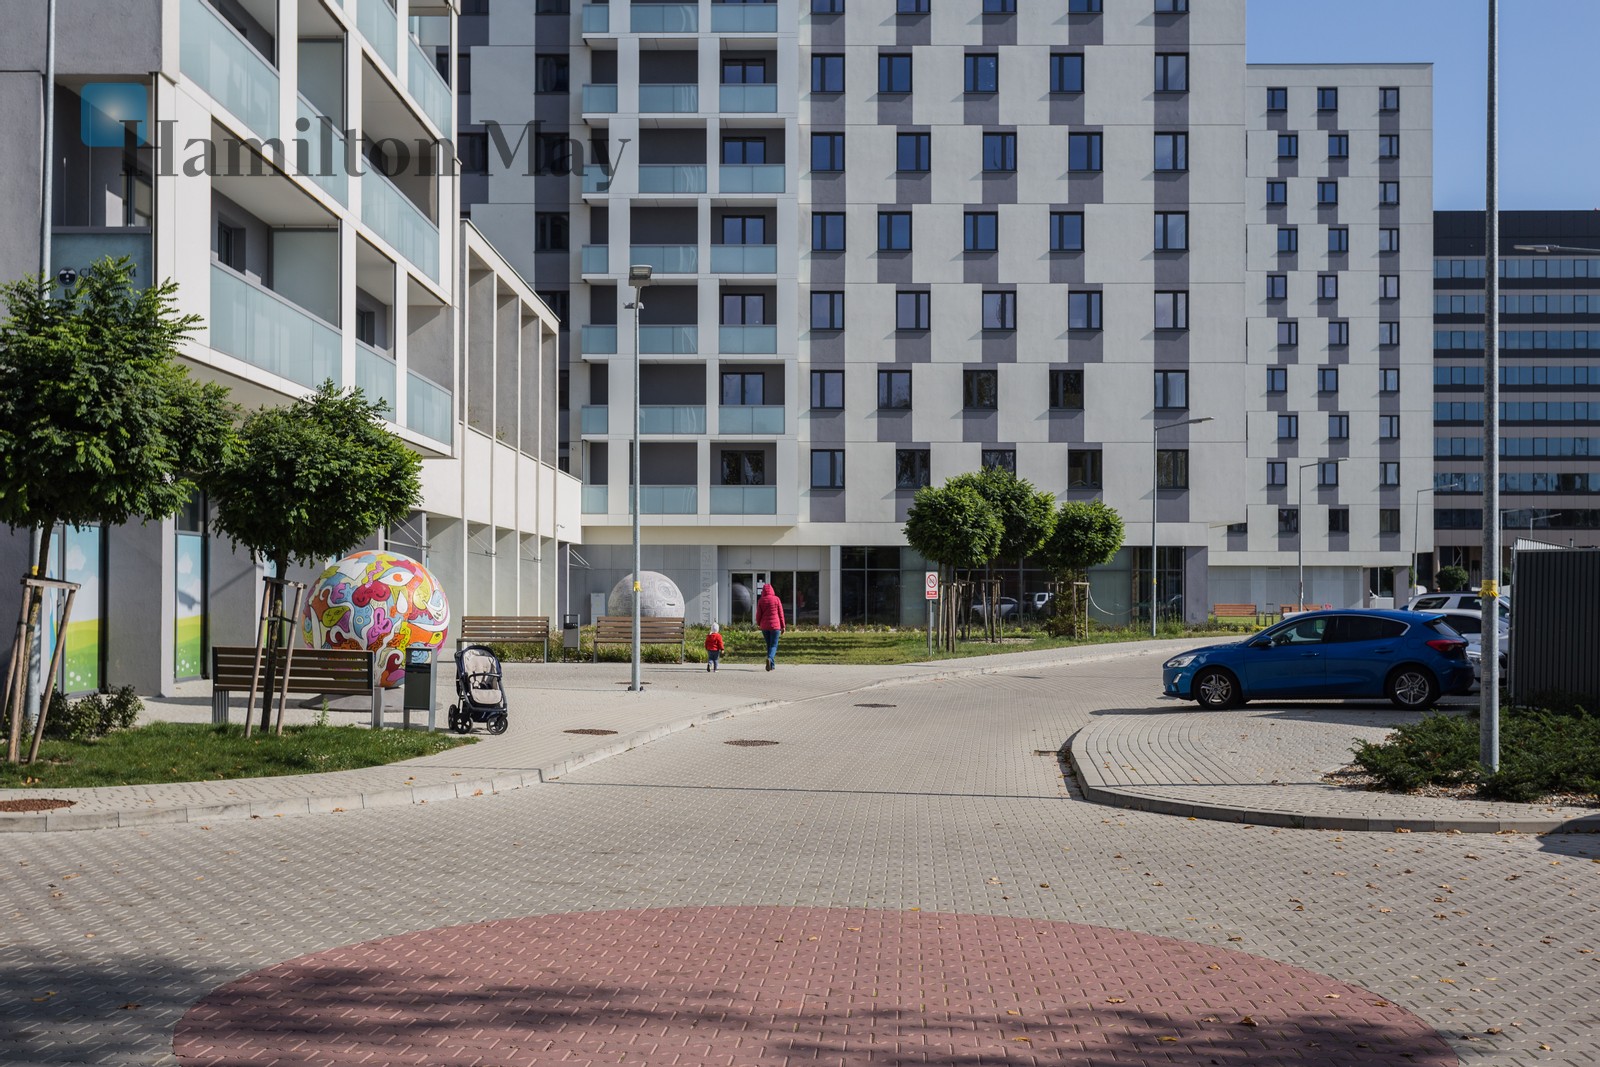 Street: Fabryczna Region: Grzegórzki Level: 11 Status: existing Number of units: 700 Price on application Rental price from: null - slider